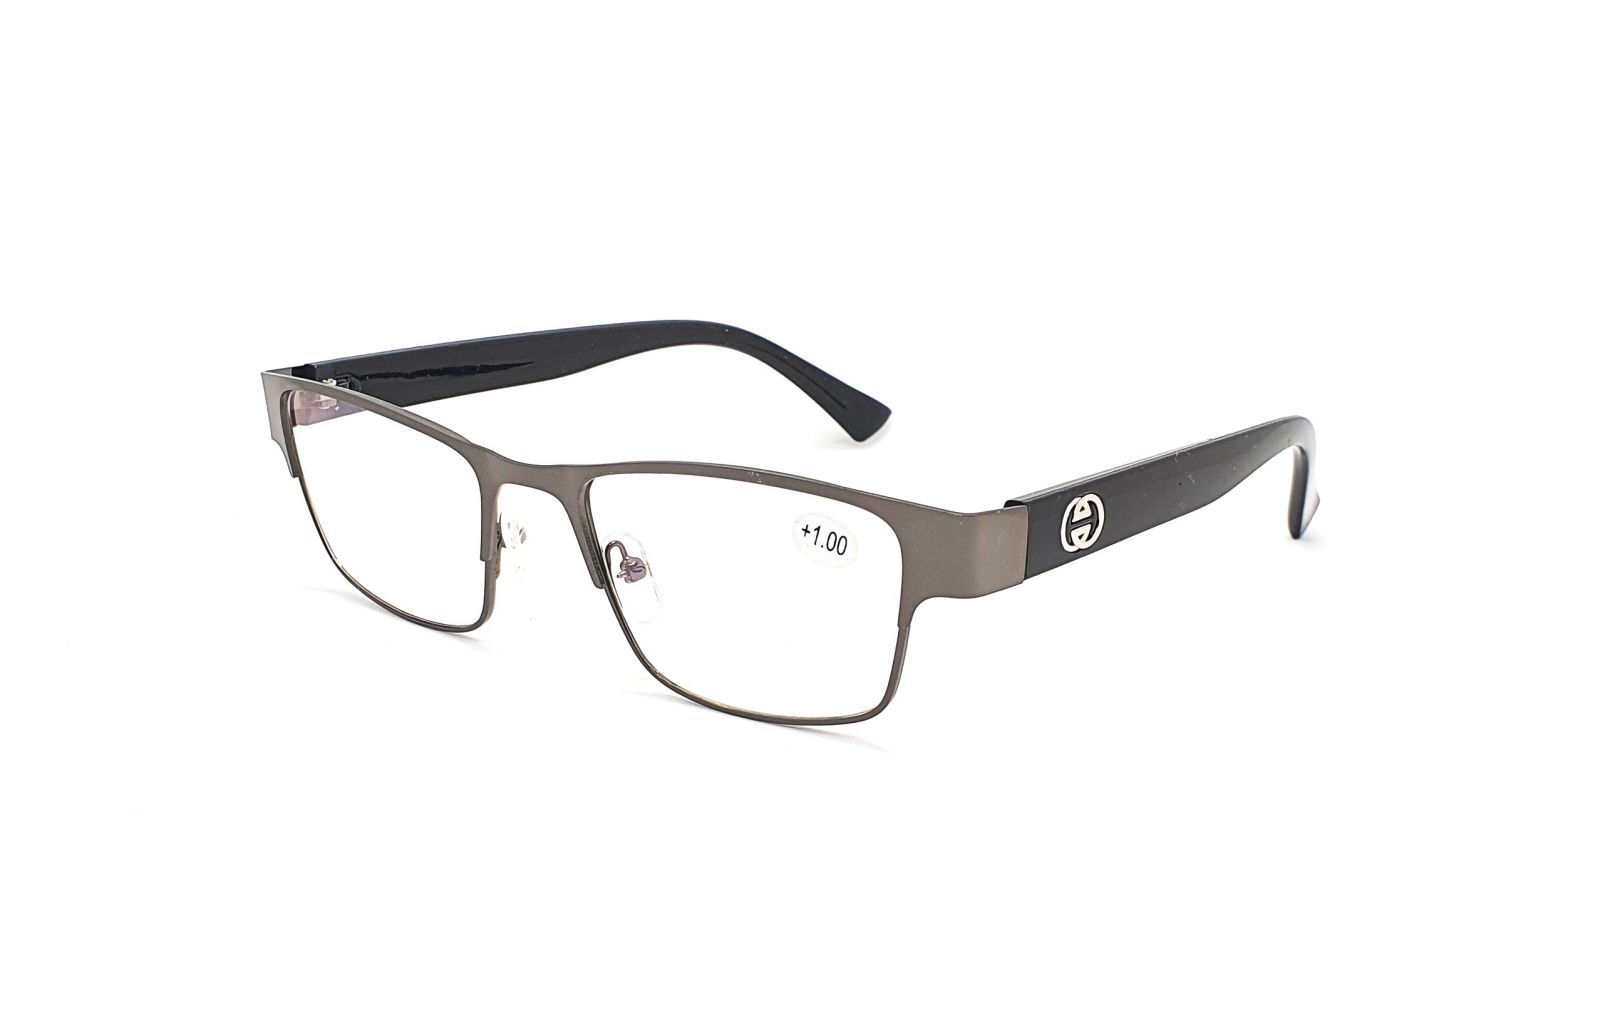 Dioptrické brýle OK231 +4,00 gray/black s antireflexní vrstvou